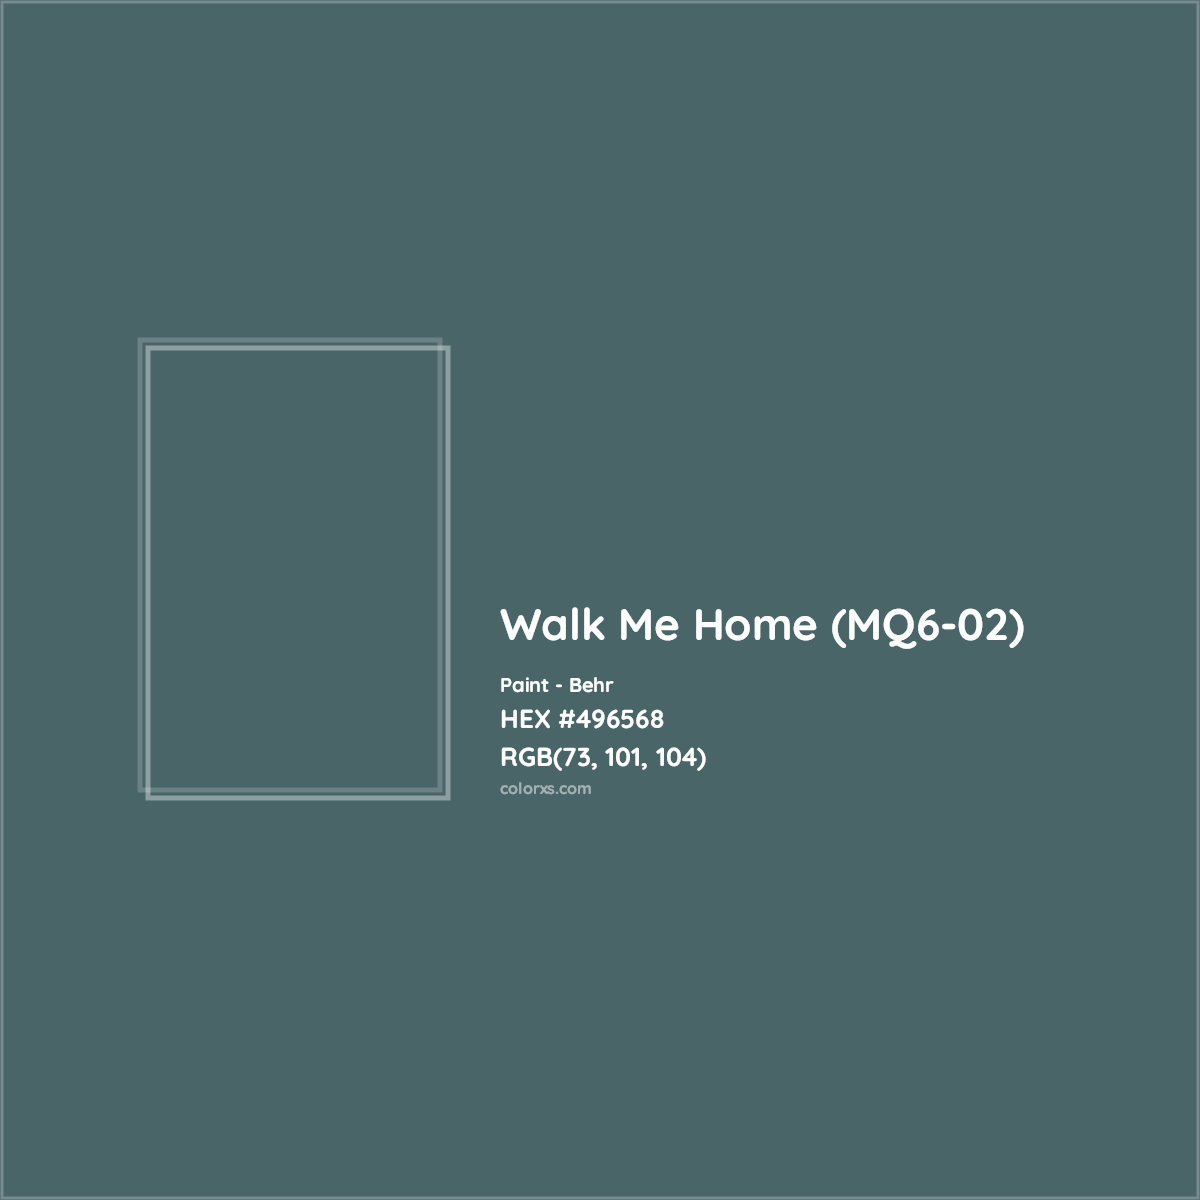 HEX #496568 Walk Me Home (MQ6-02) Paint Behr - Color Code